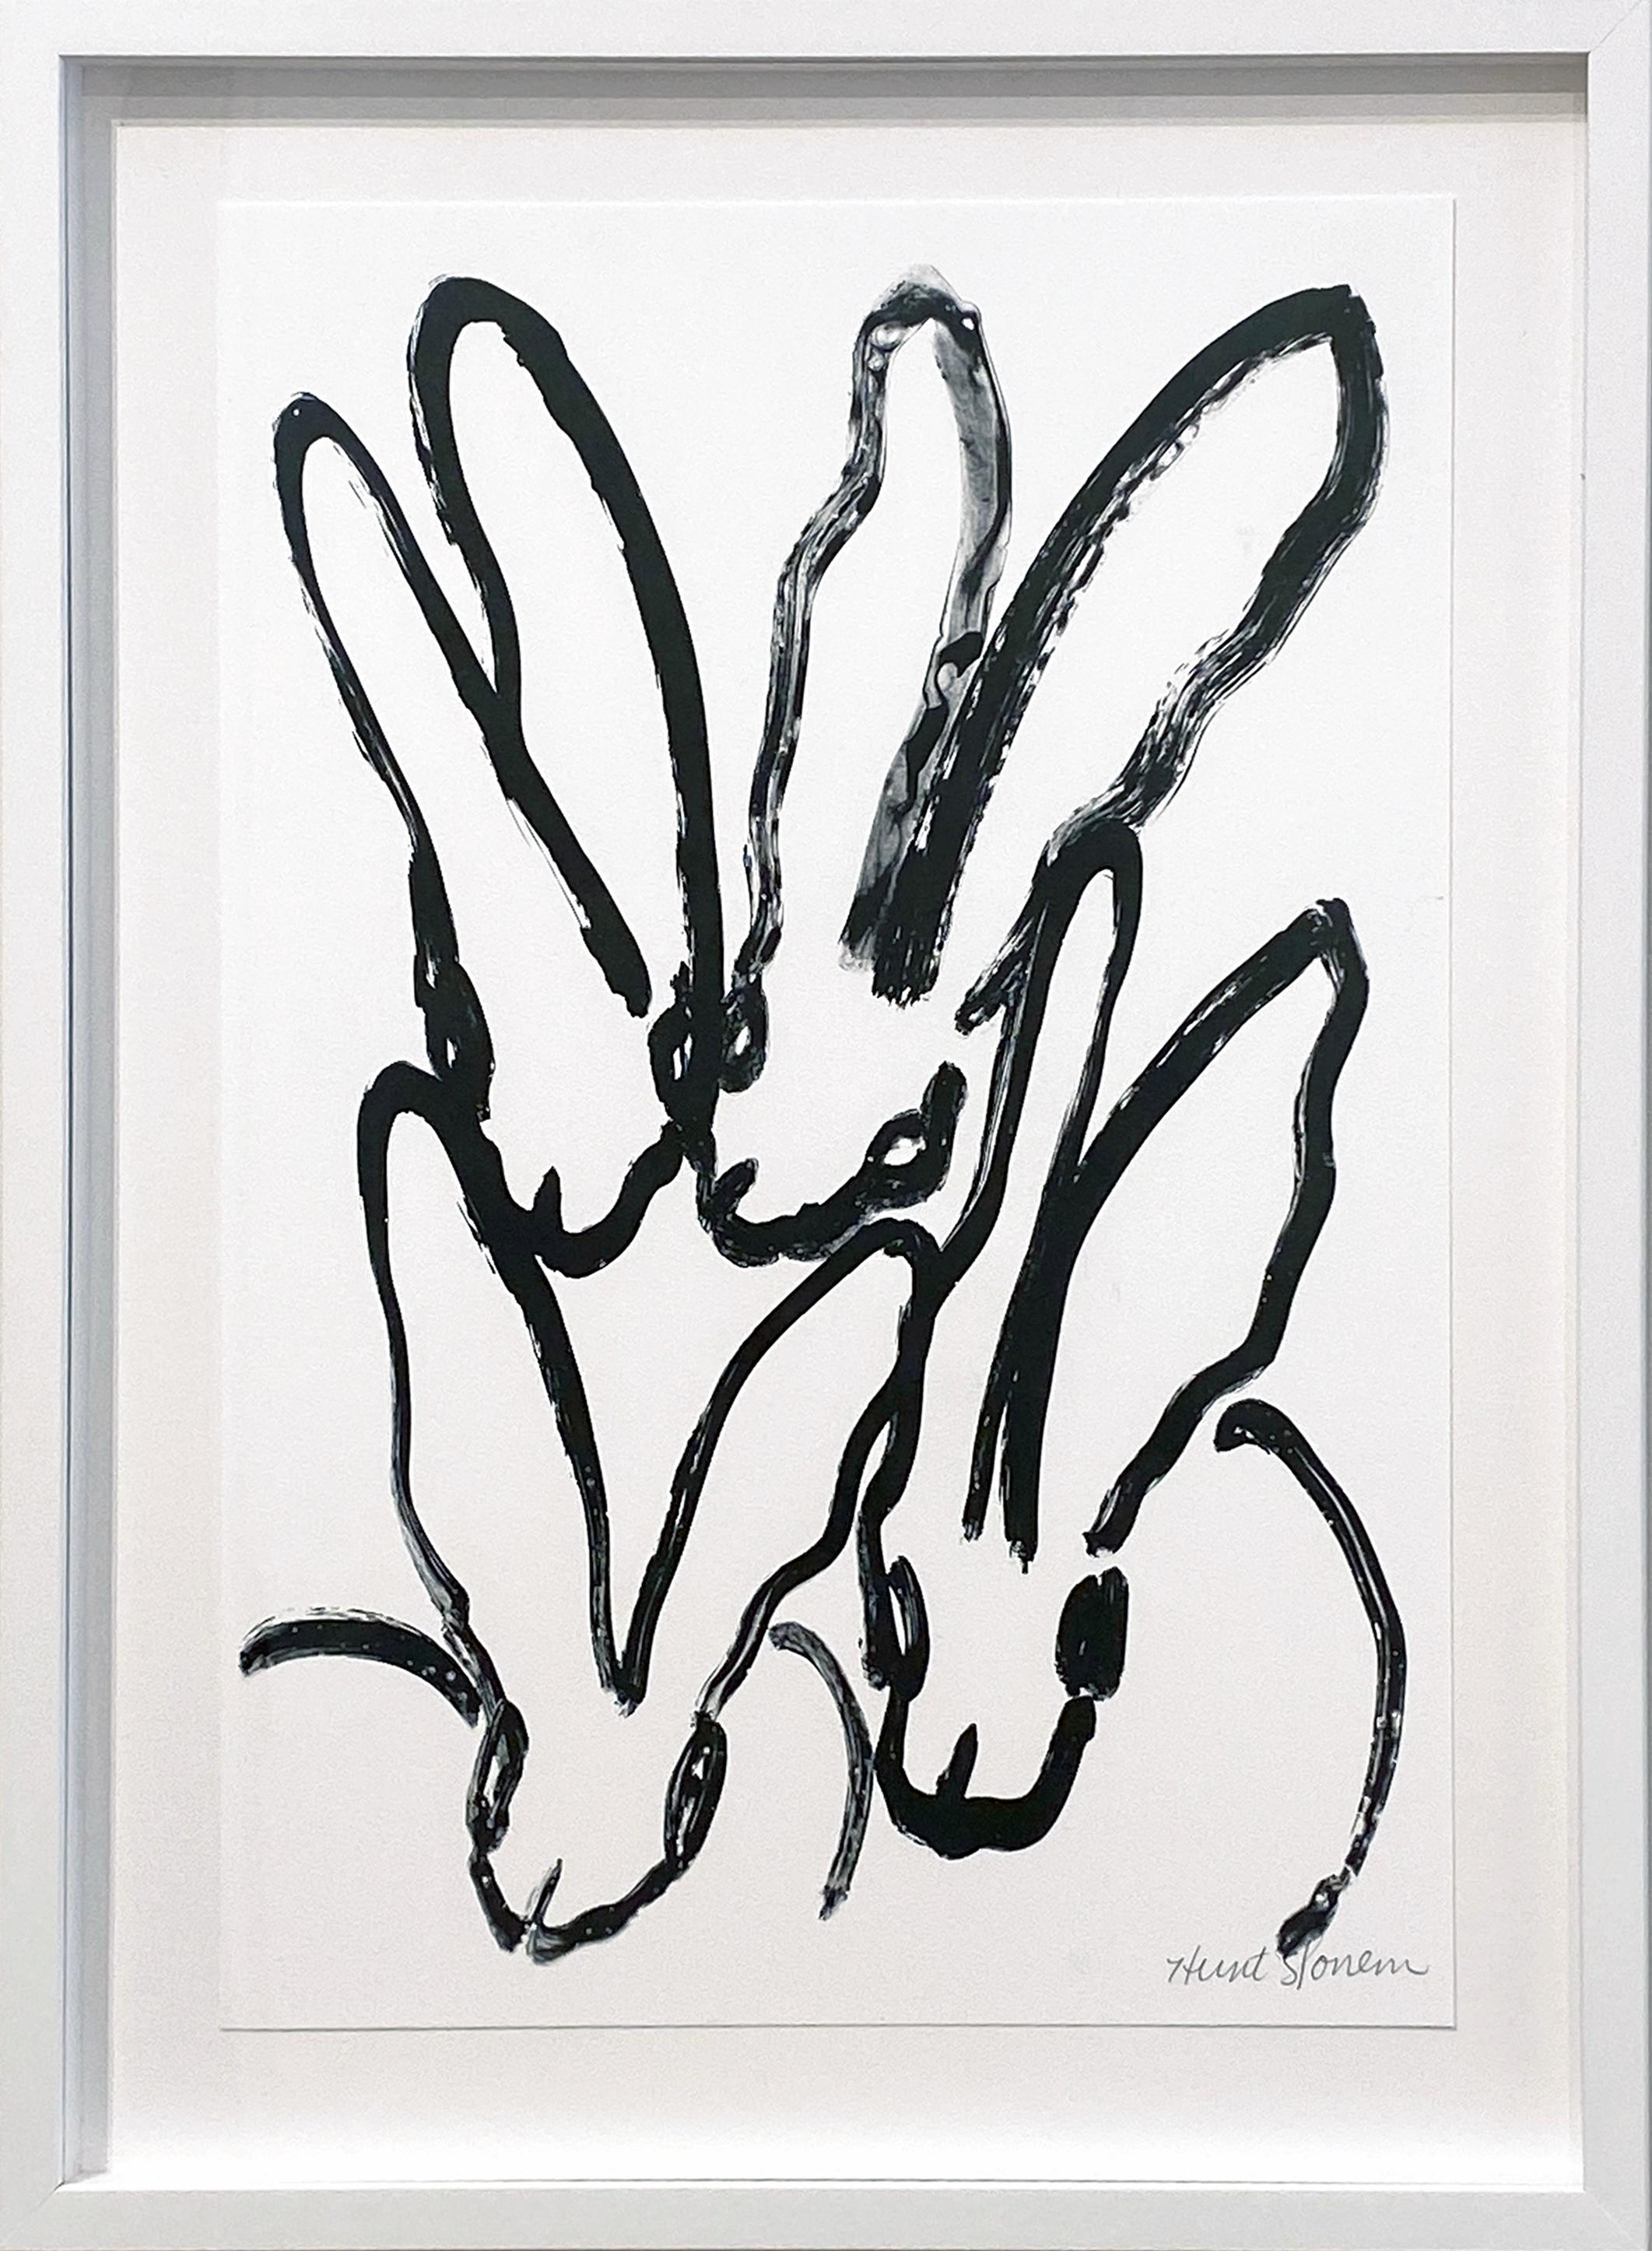 BW Bunny 5 - Print by Hunt Slonem